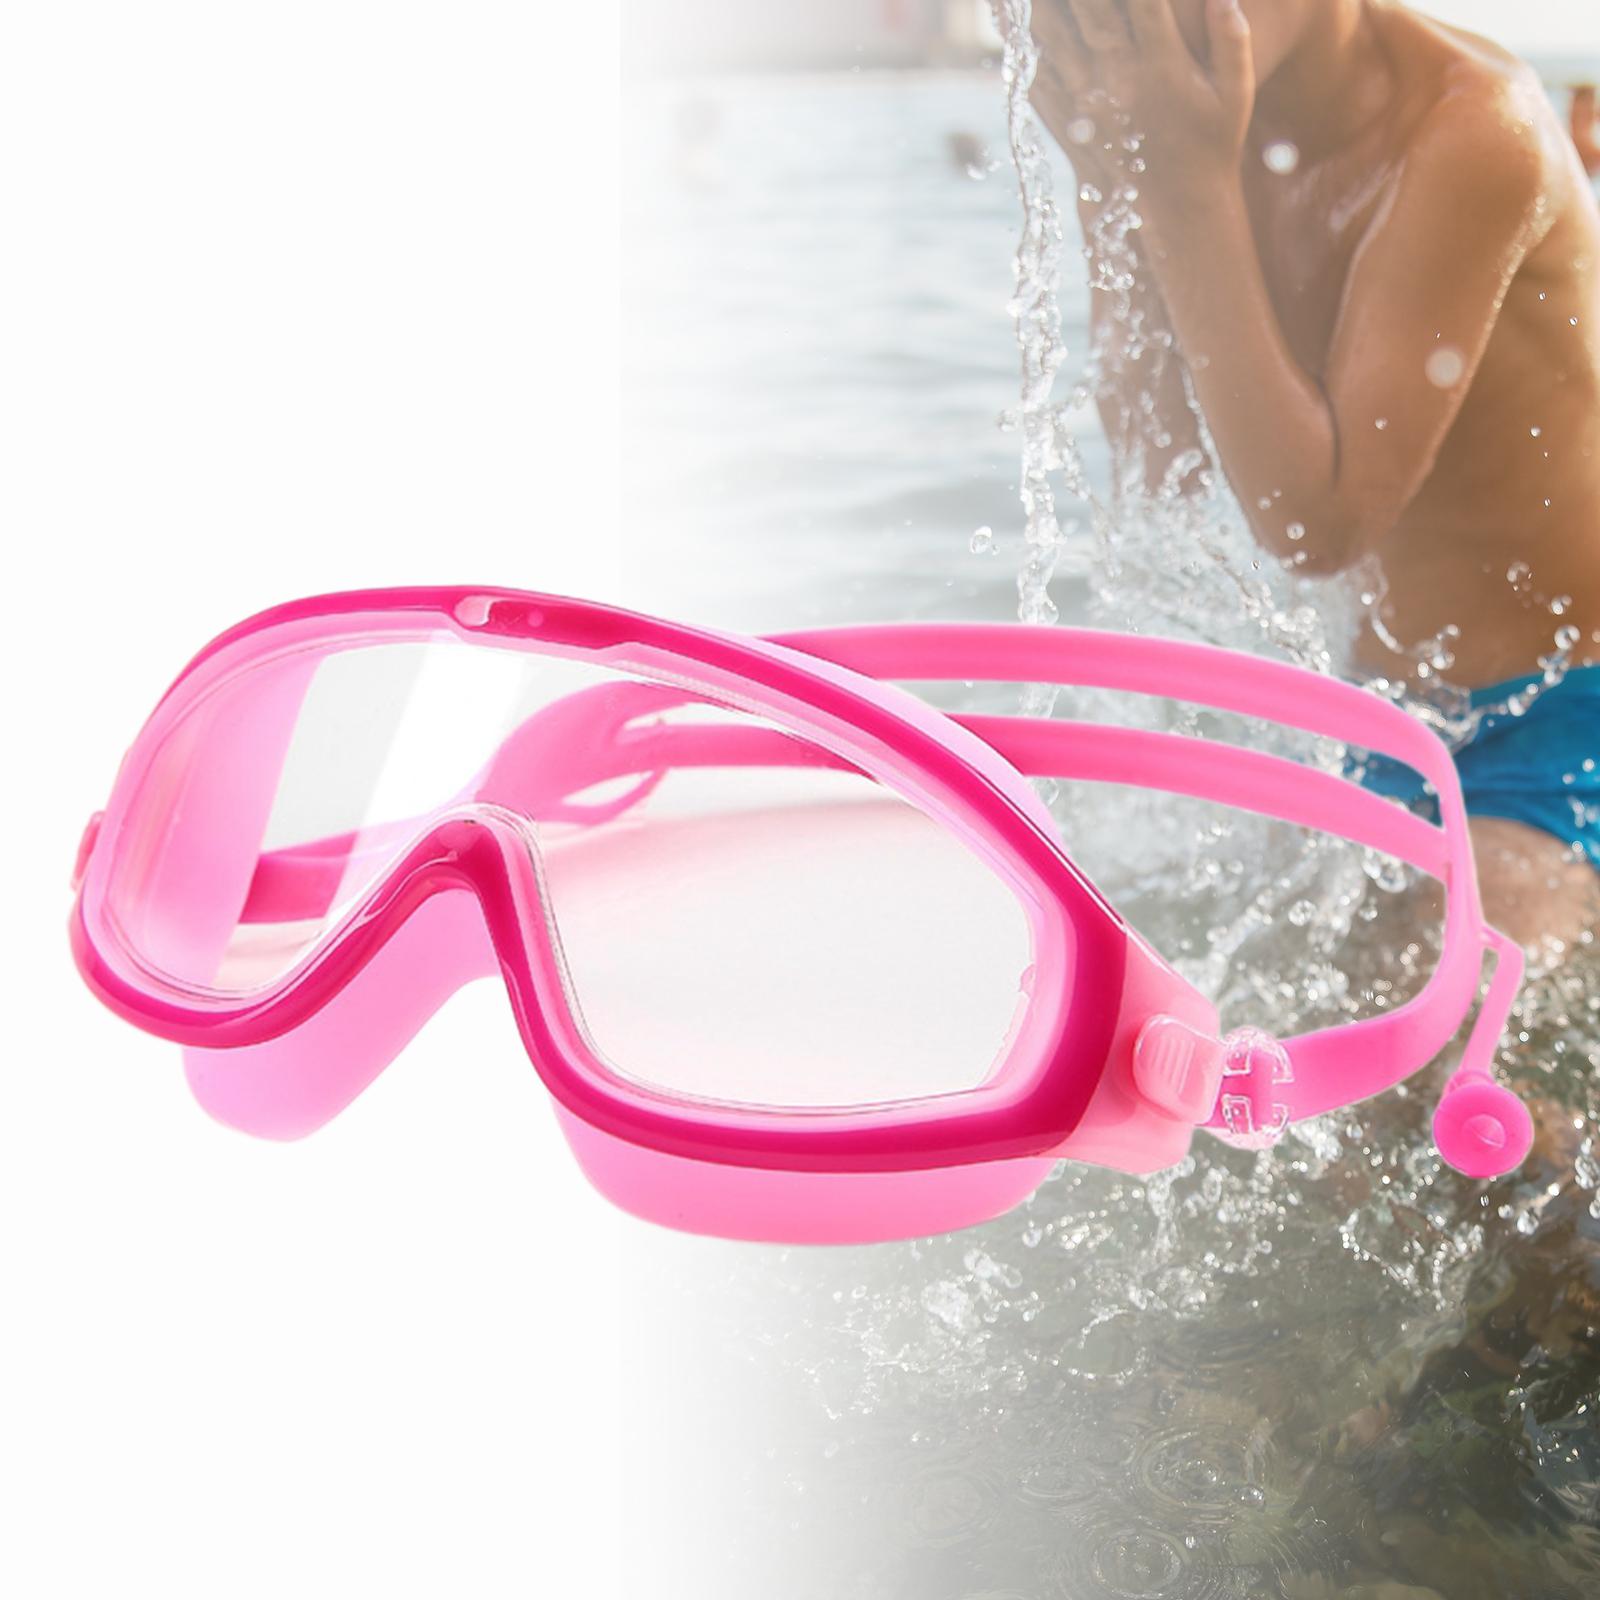 Kids Swim Goggles with Earplug Adjustable for Kids 6-14 Teenagers Boys Girls Pink